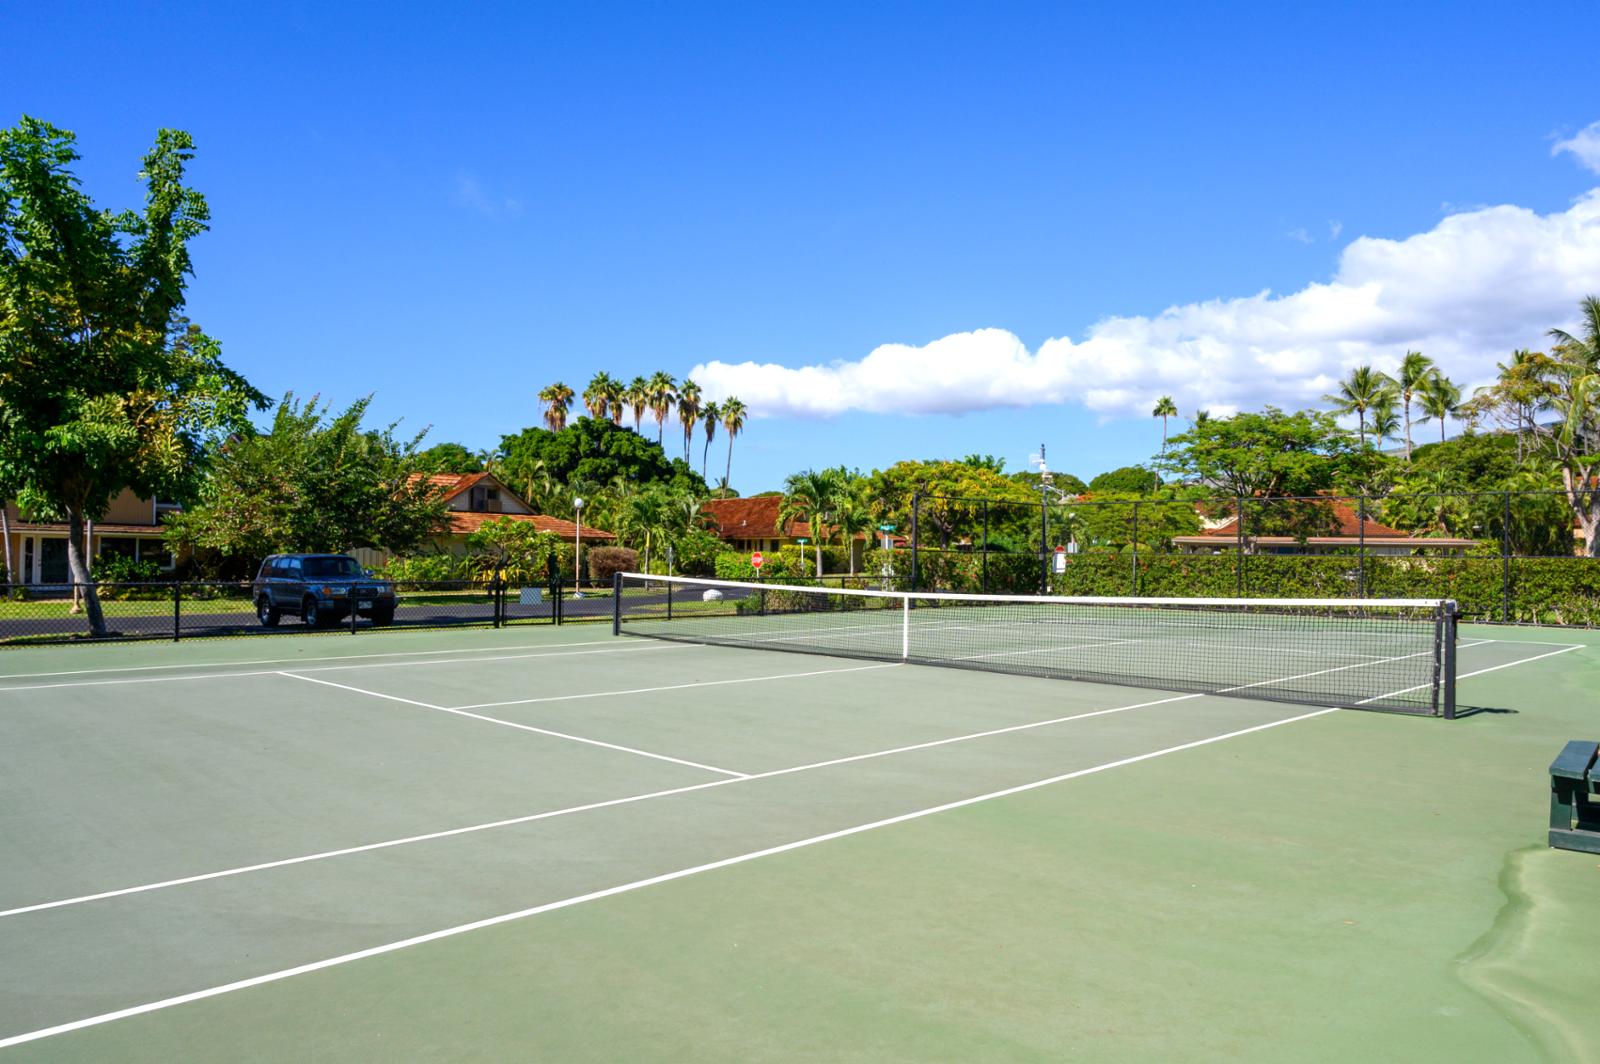 Large tennis court